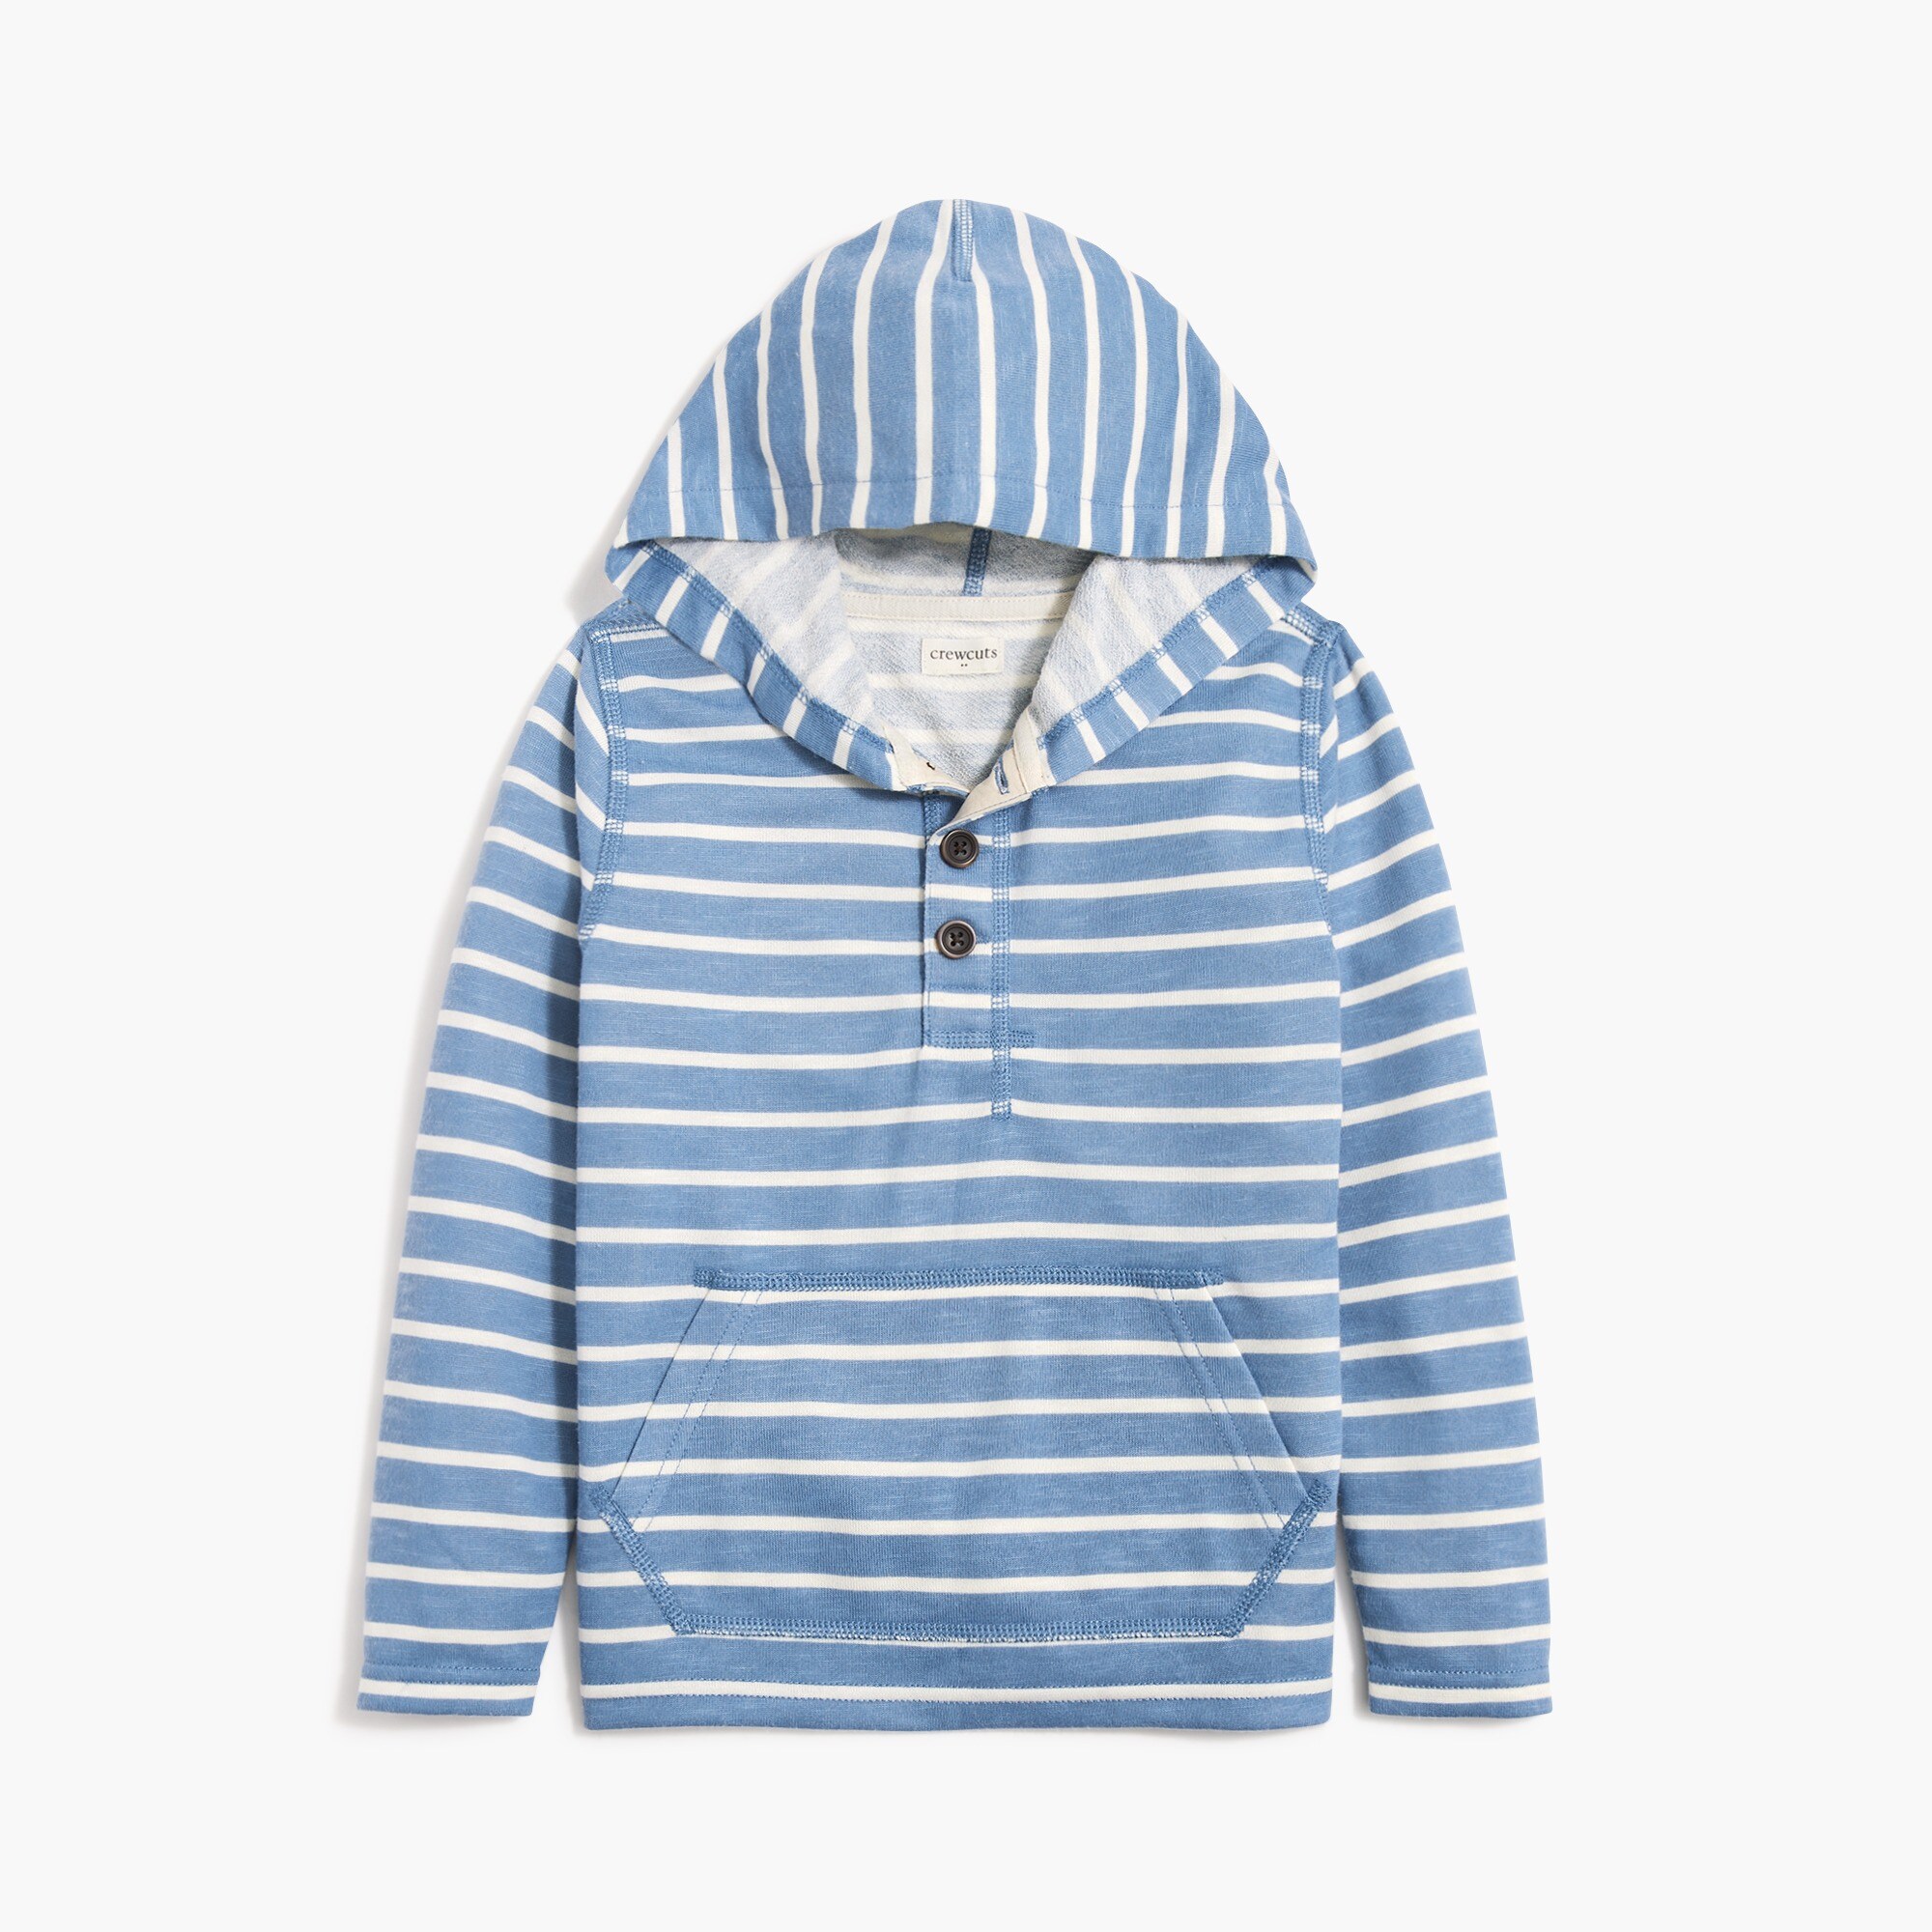  Boys' striped henley hoodie